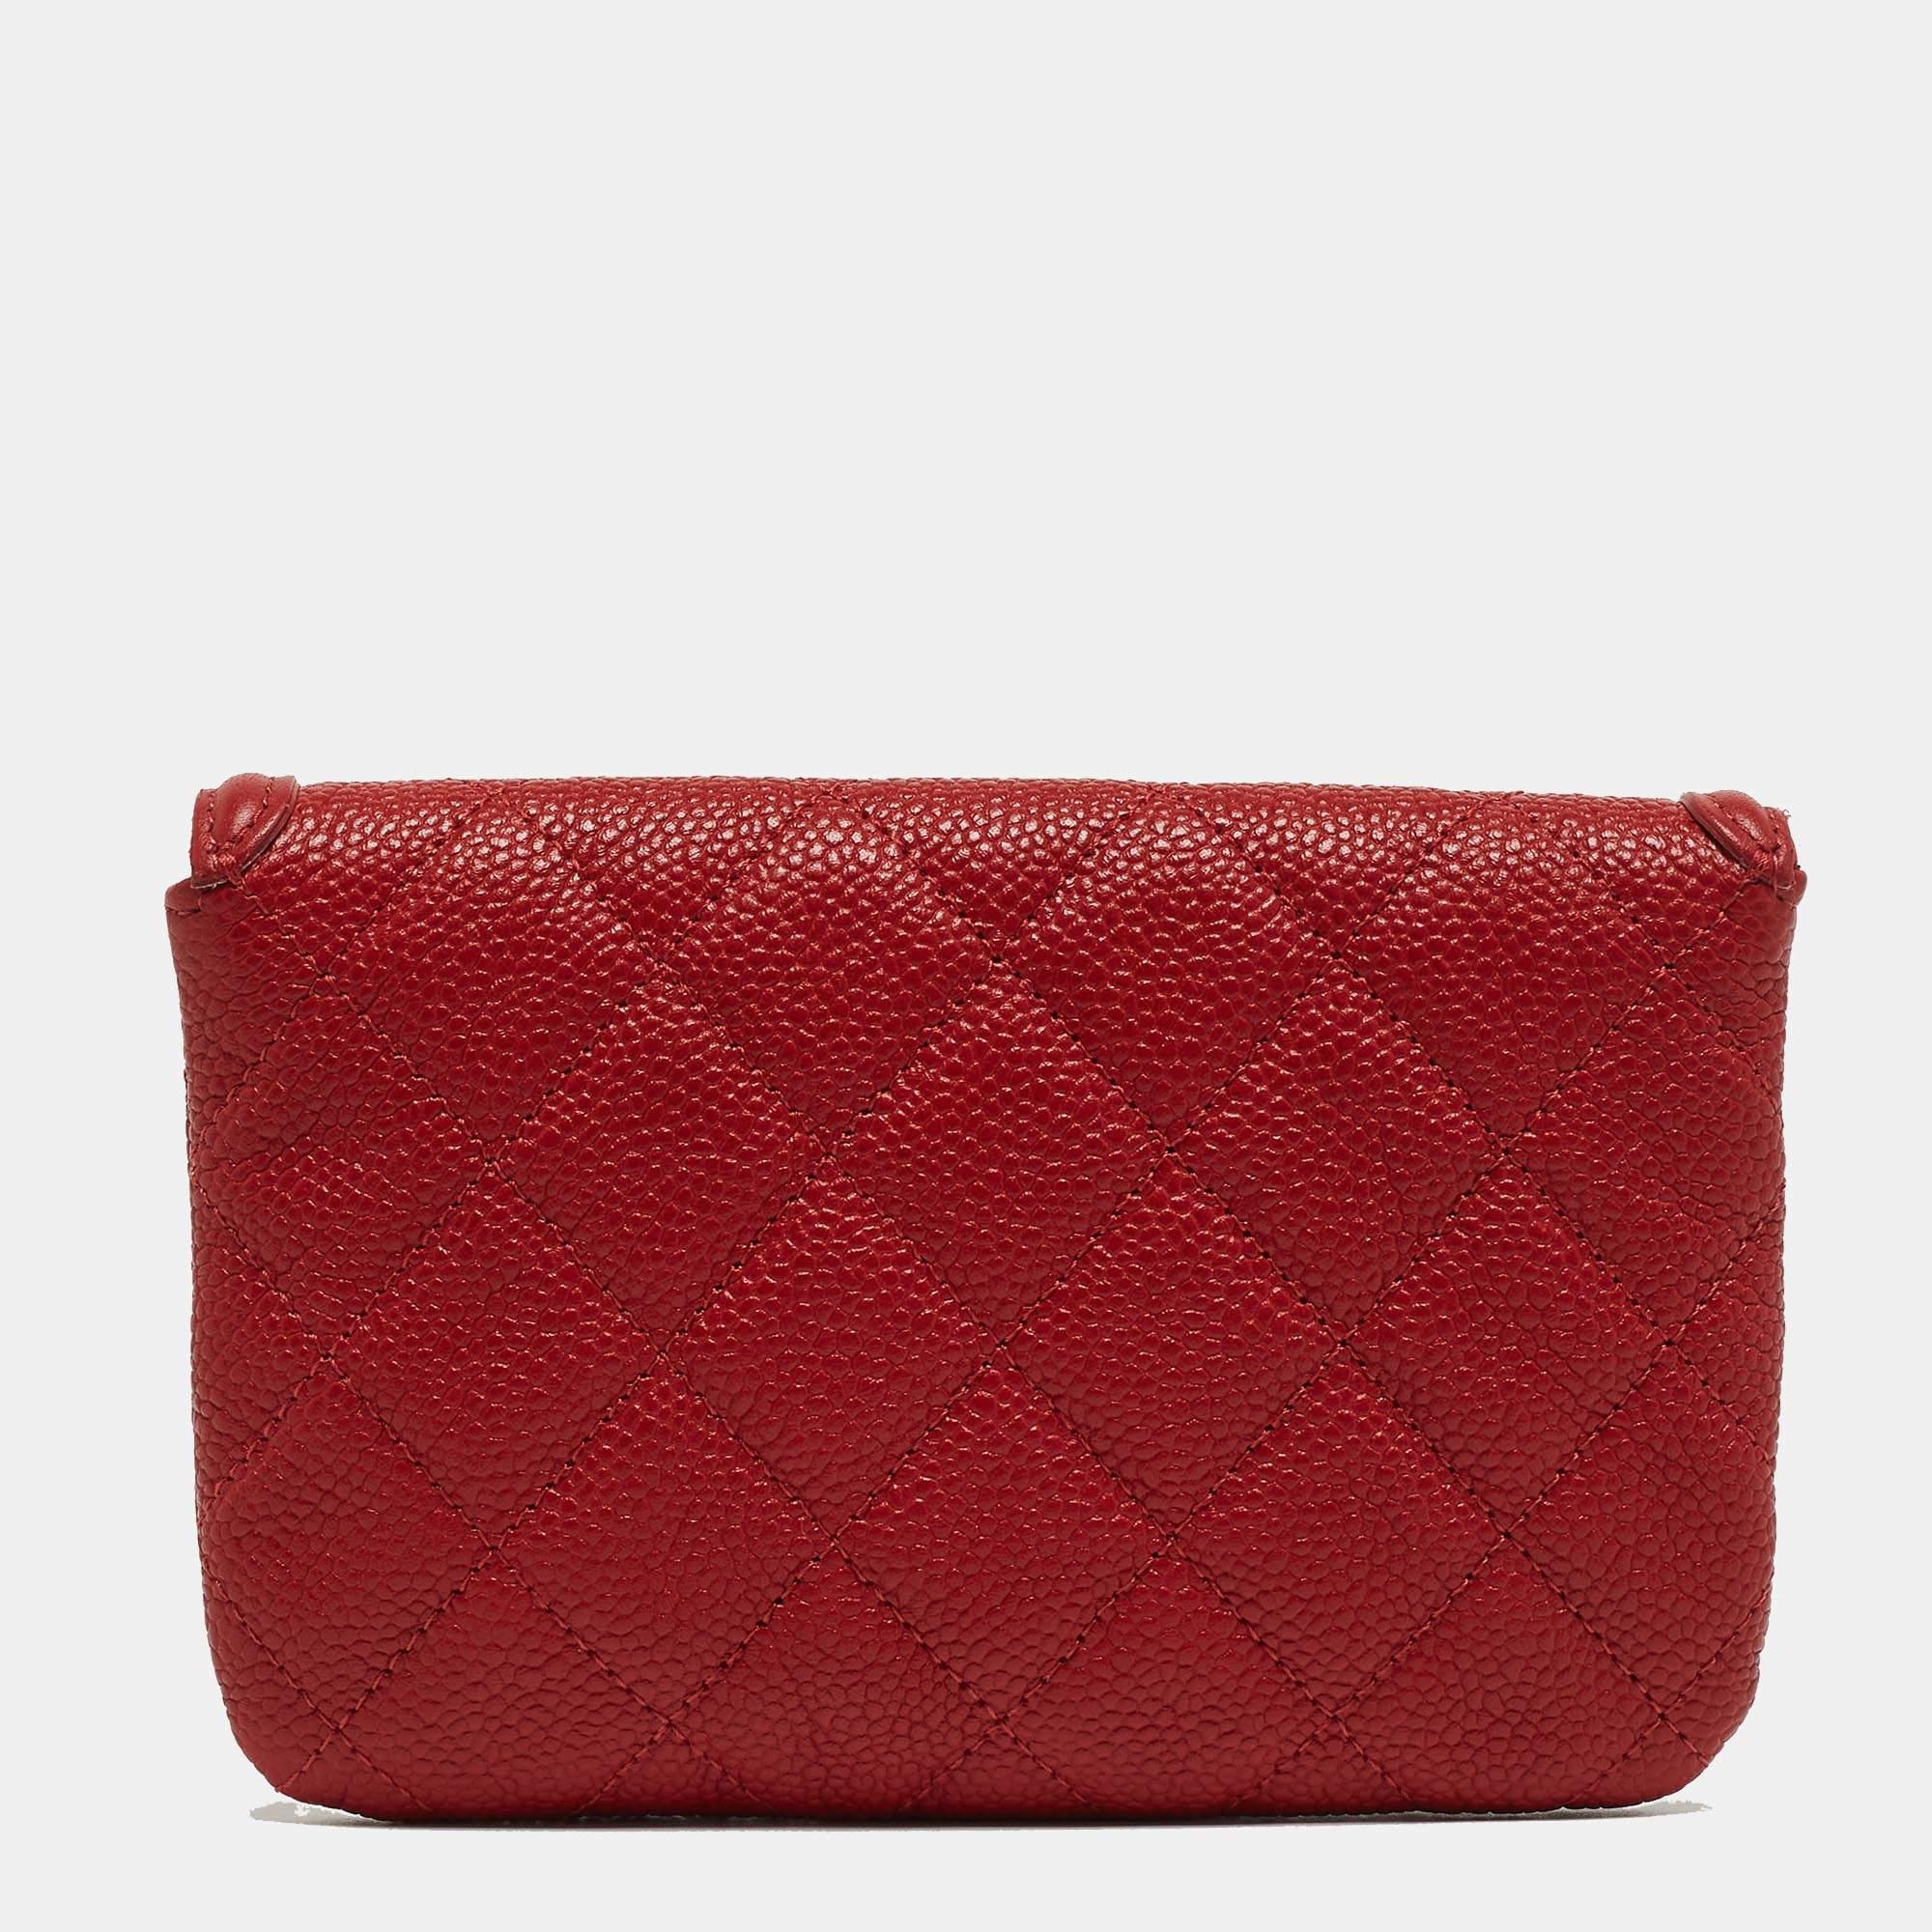 Chanel Rotes filigranes gestepptes Portemonnaie aus Leder in Kaviar Damen